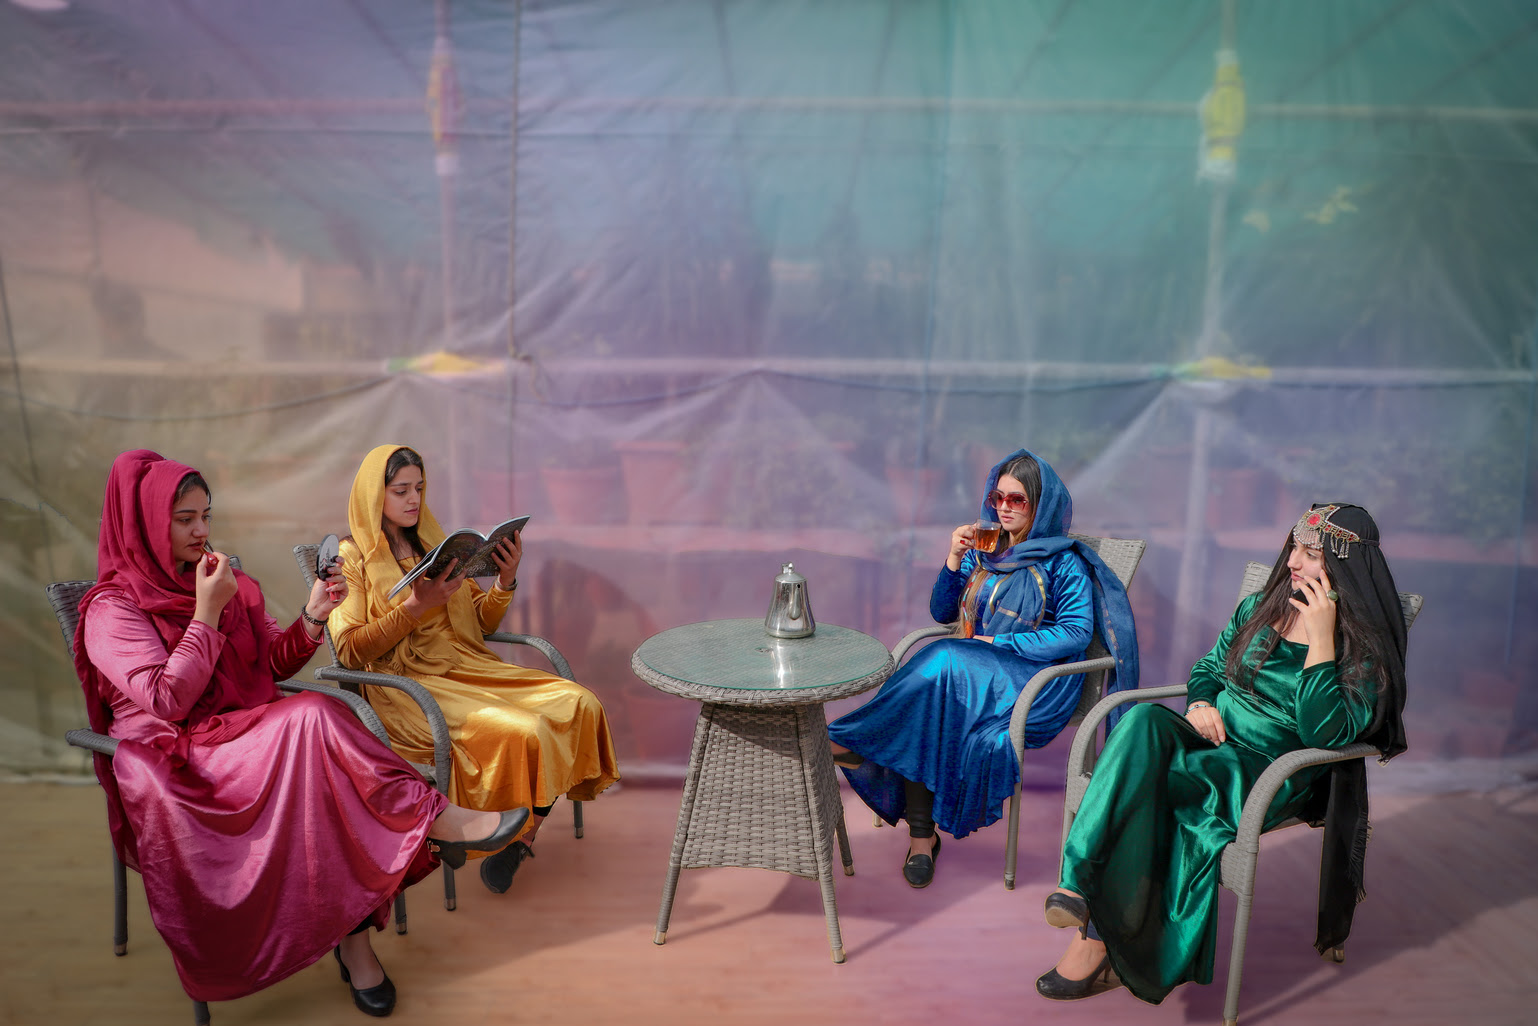 quatre femmes en afghanistan portent des robes et sont assises